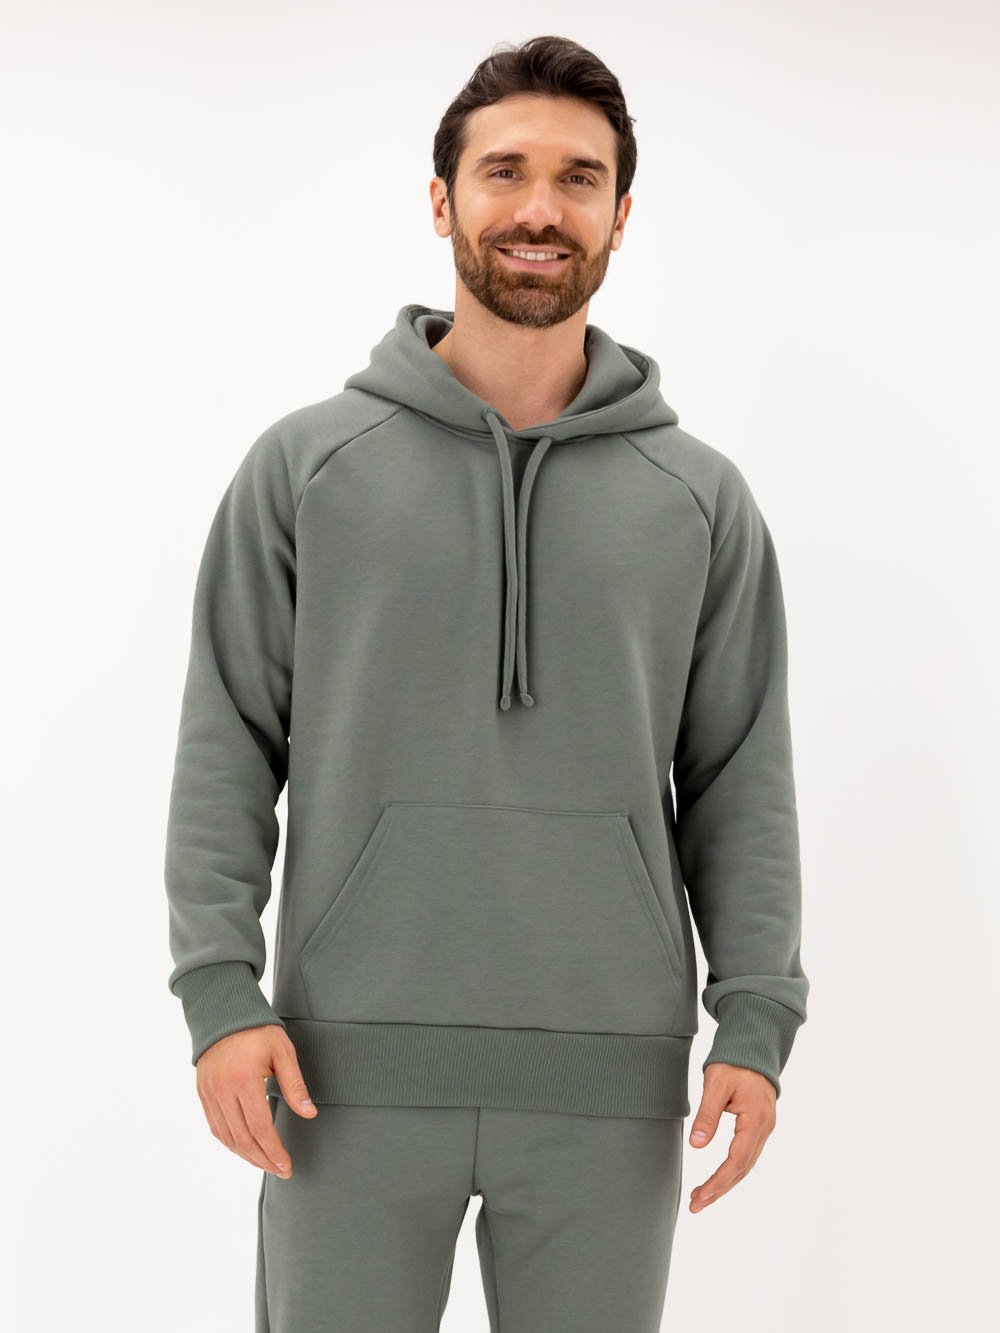 Hoodies + Sweatshirts — Men's Organic Cotton Collection. Made in USA ...